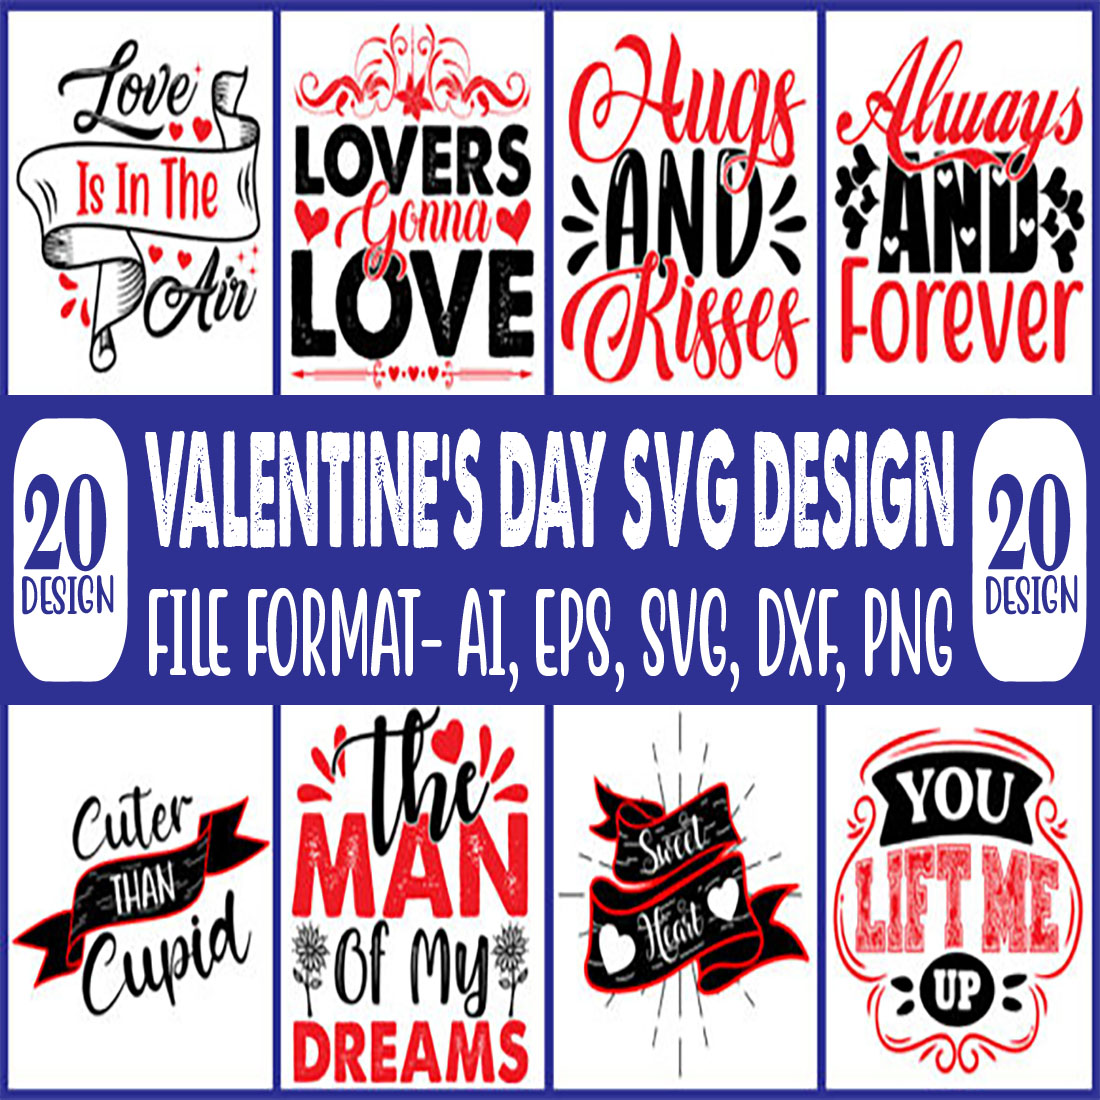 20 Valentine's Day SVG Design Bundle main cover.